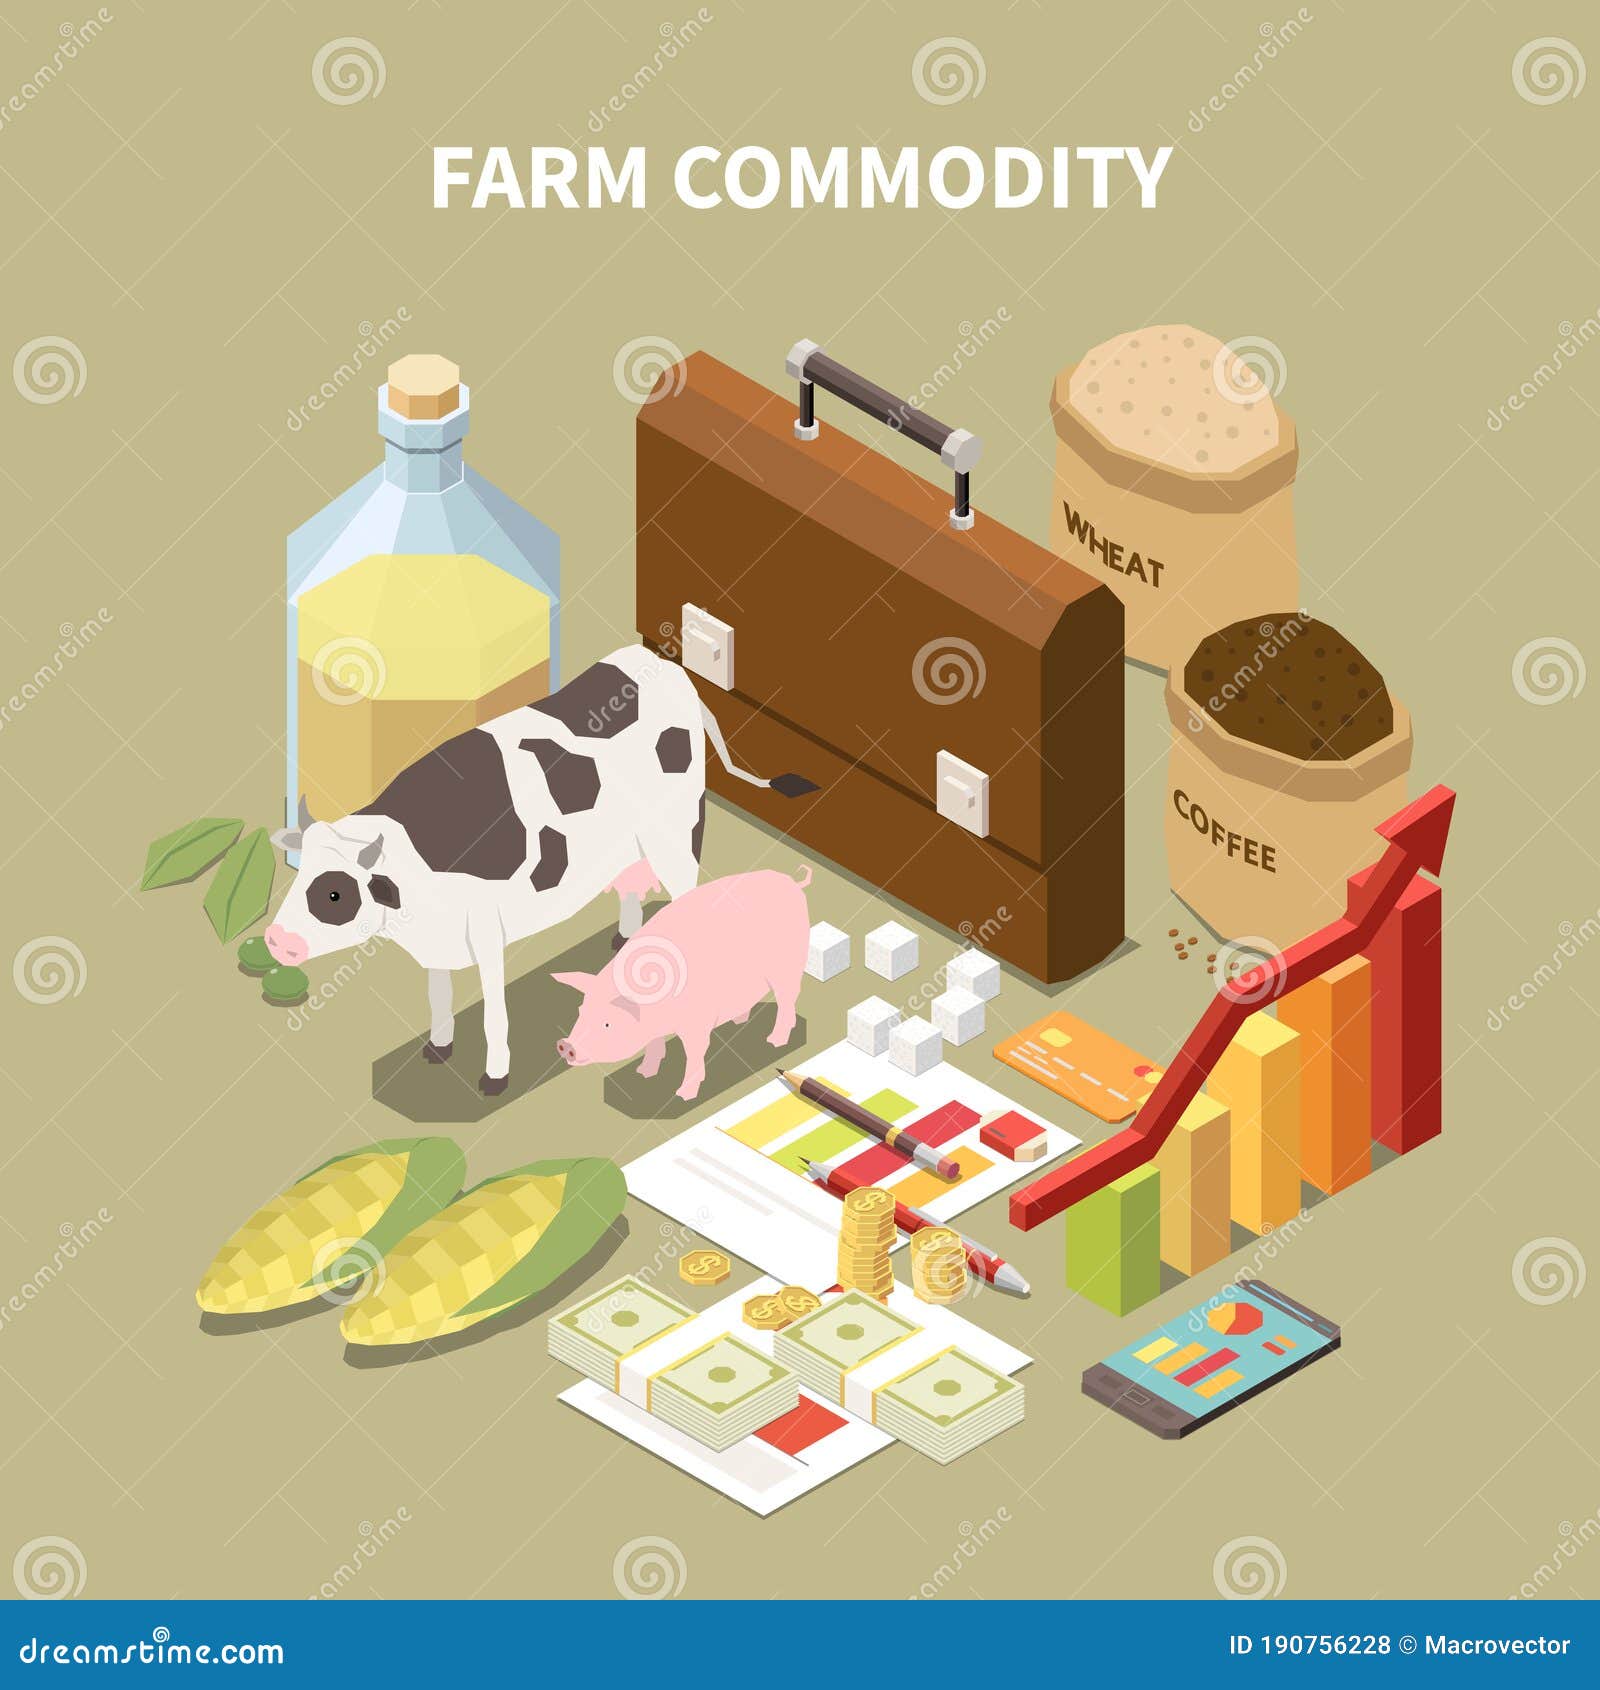 farm commodity isometric composition